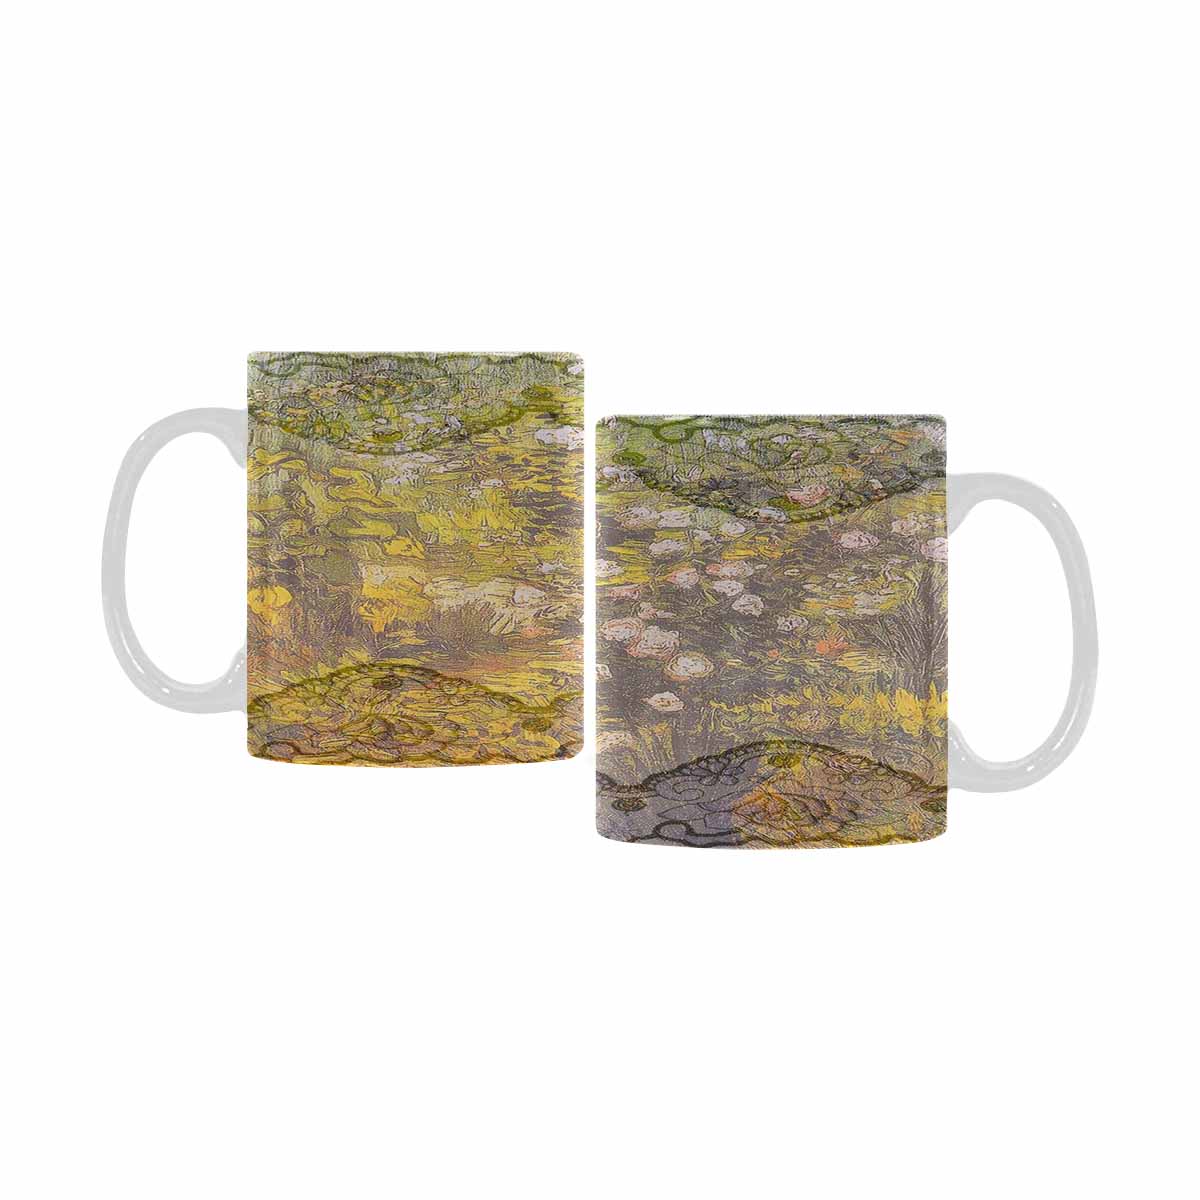 Vintage floral coffee mug or tea cup, Design 05x